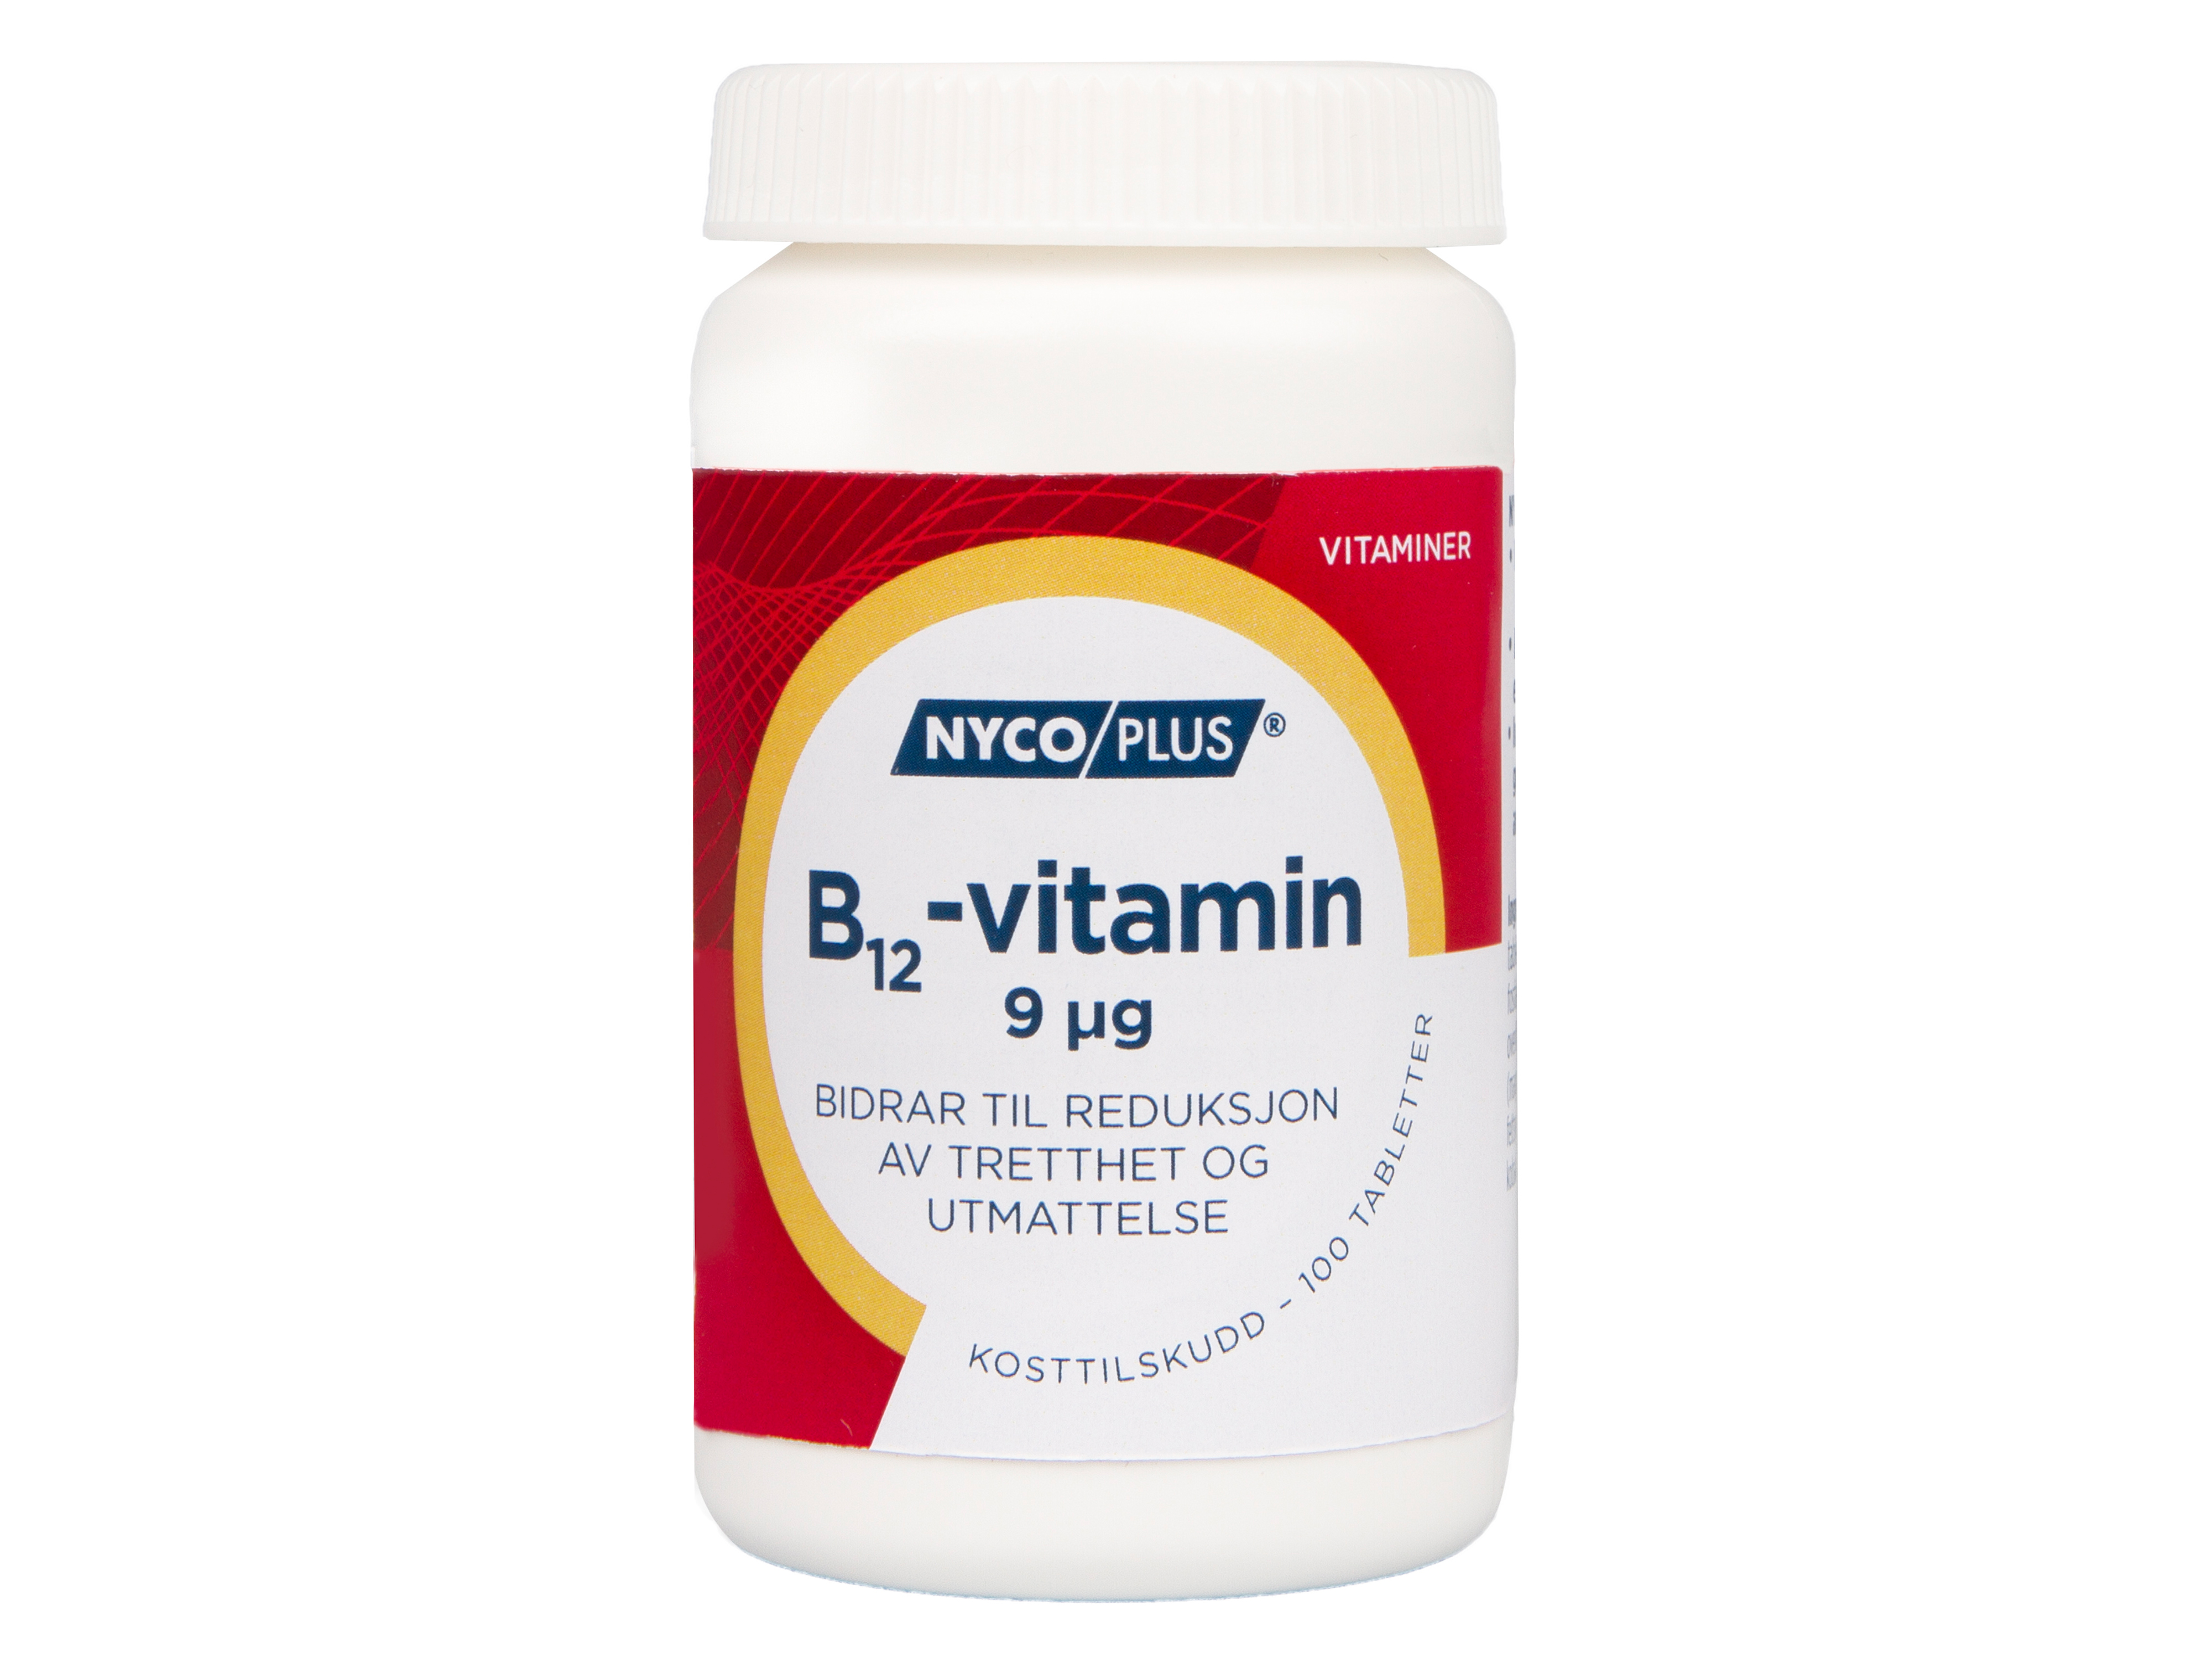 Nycoplus B12-vitamin 9 µg, 100 tabletter